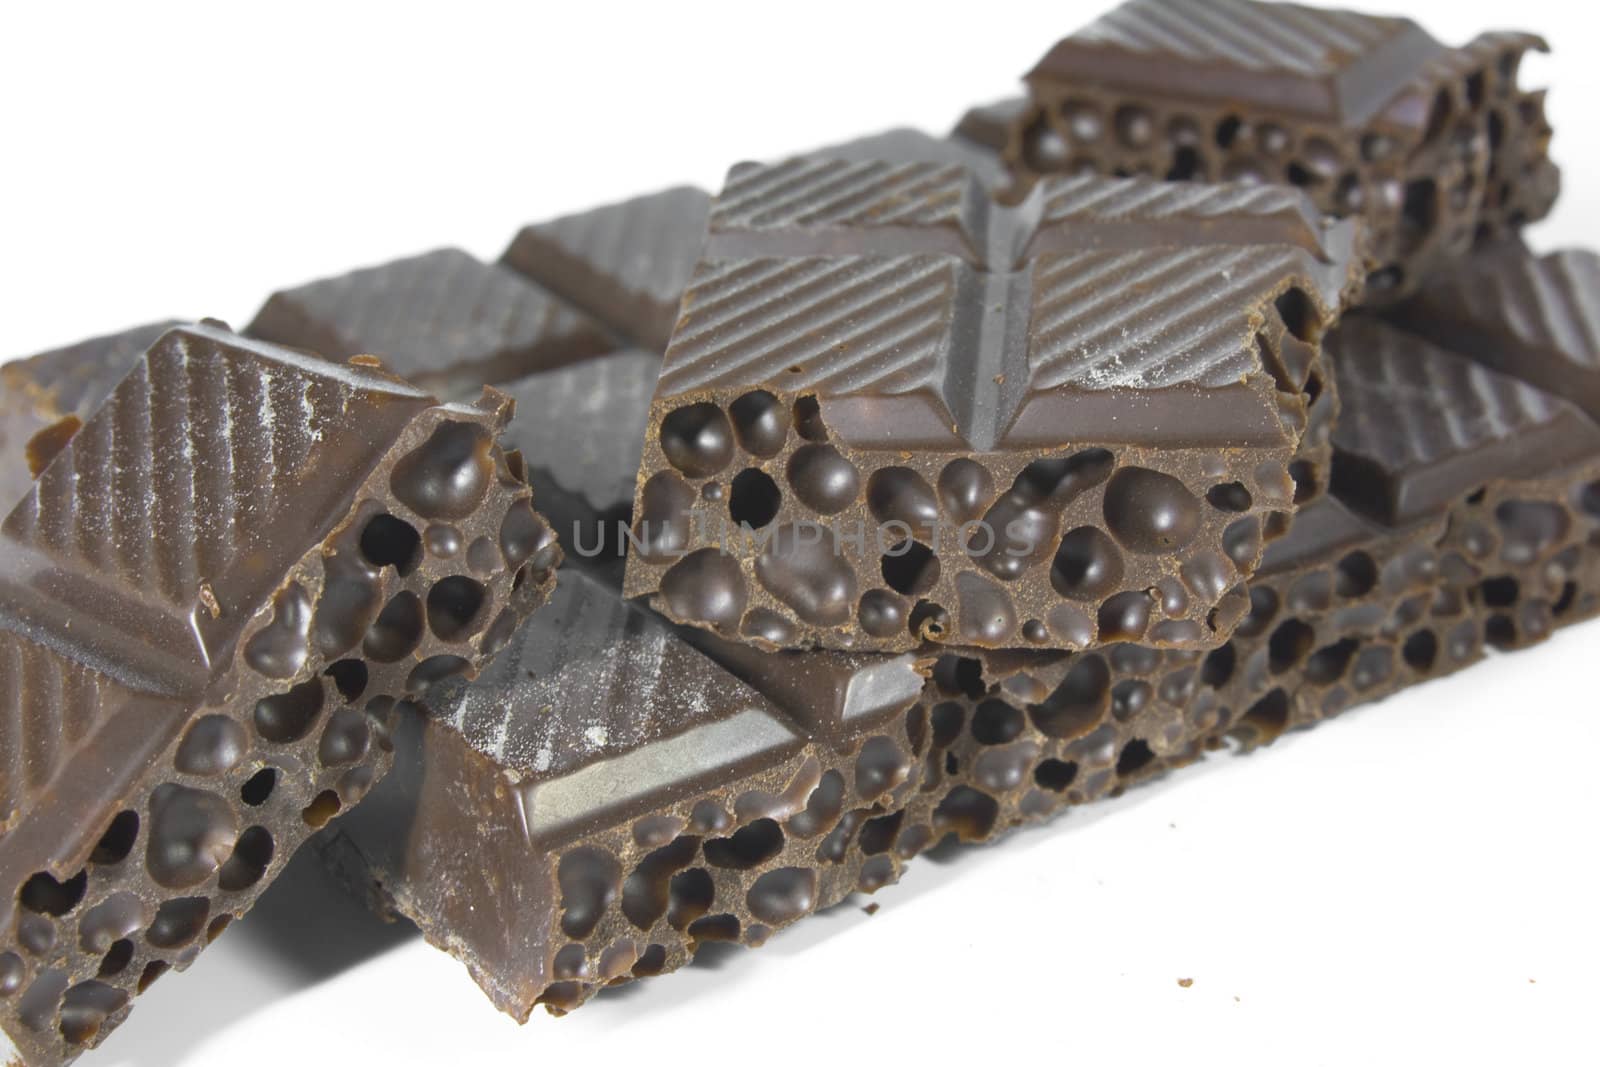 Porous chocolate by Dikar